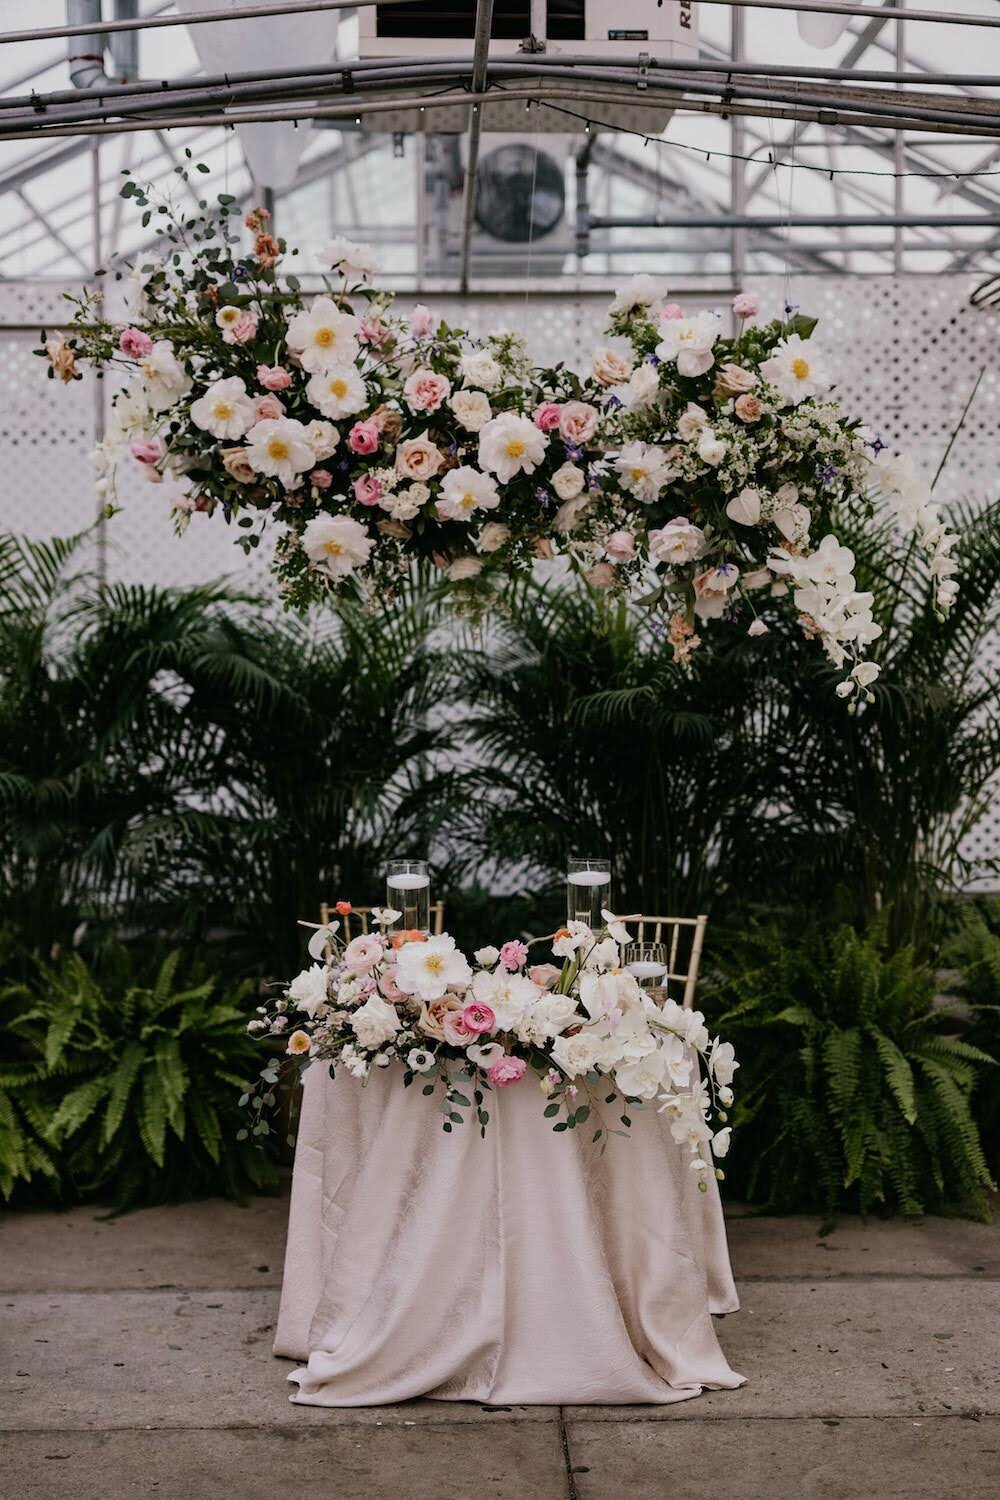 Melissa-Logan-Whimsical-Greenhouse-Philadelphia-Wedding-flowers-by-Sebesta-Design15